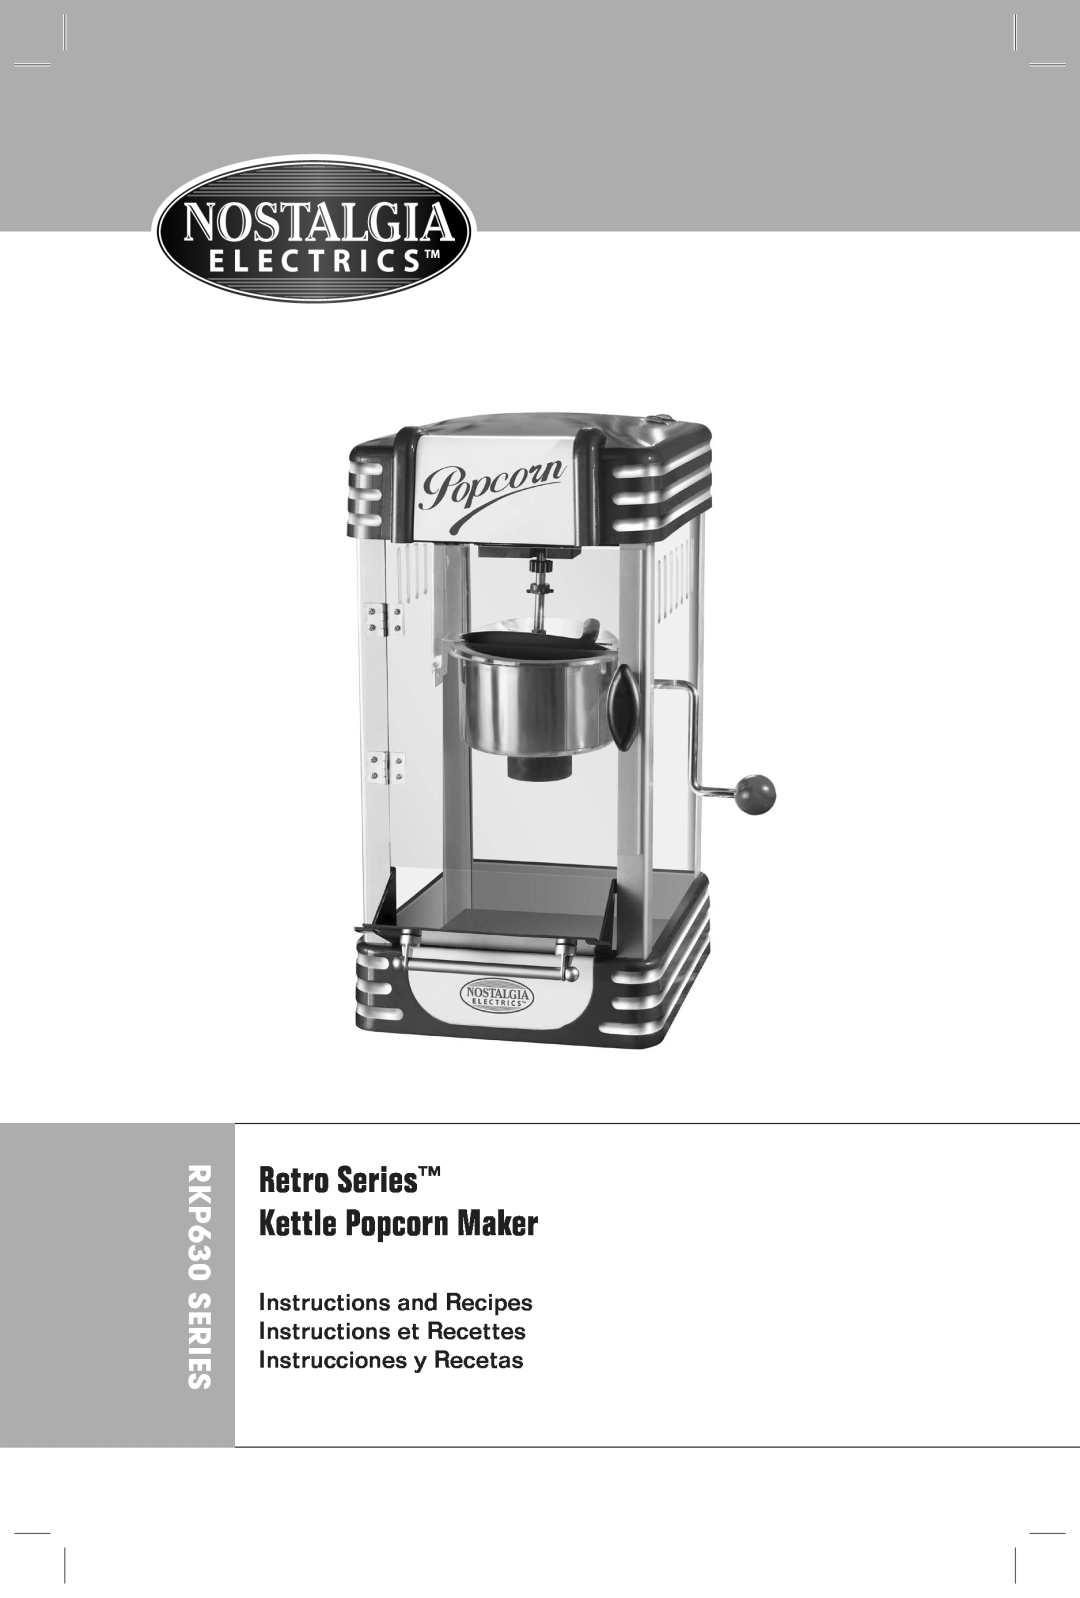 Nostalgia Electrics manual RKP630 SERIES, Retro Series Kettle Popcorn Maker 